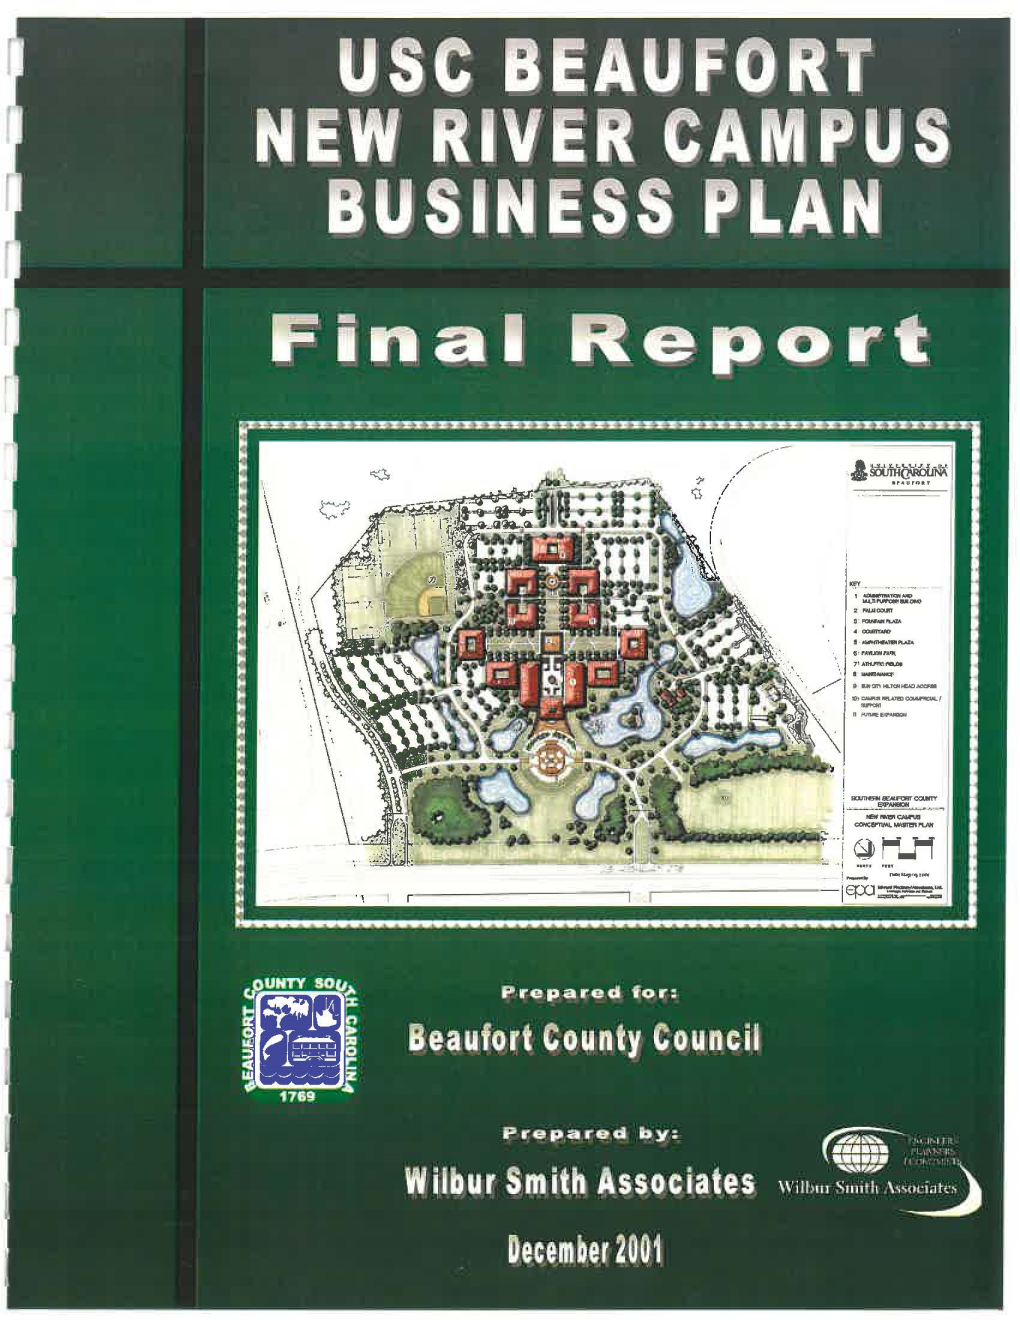 USC Beaufort New River Campus Business Plan Final Report